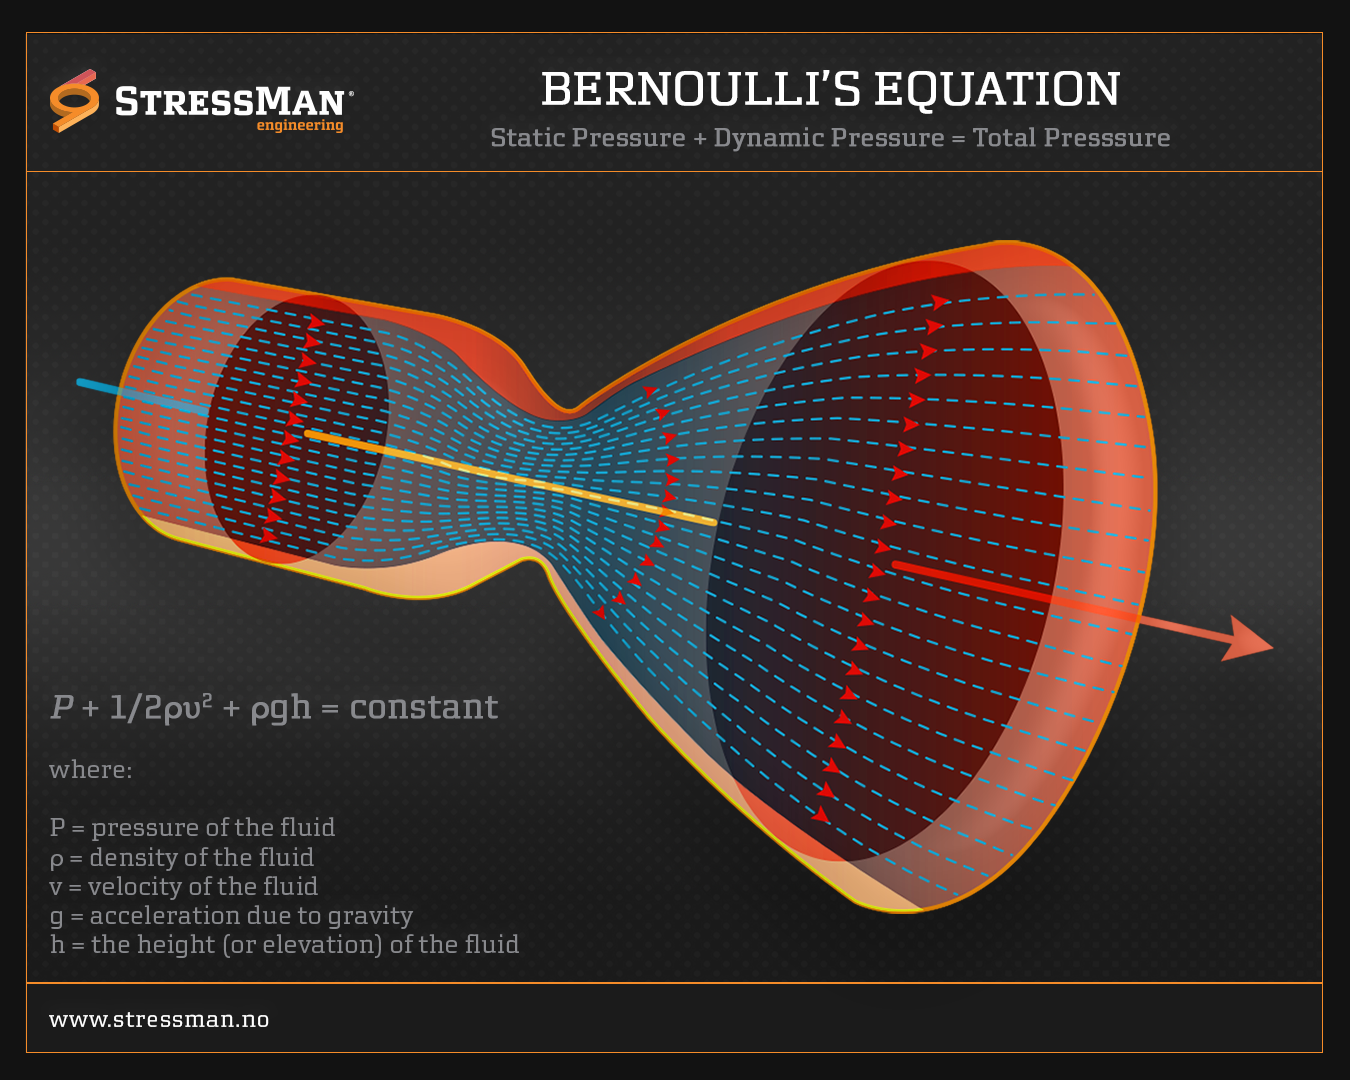 Bernoulli's theorem